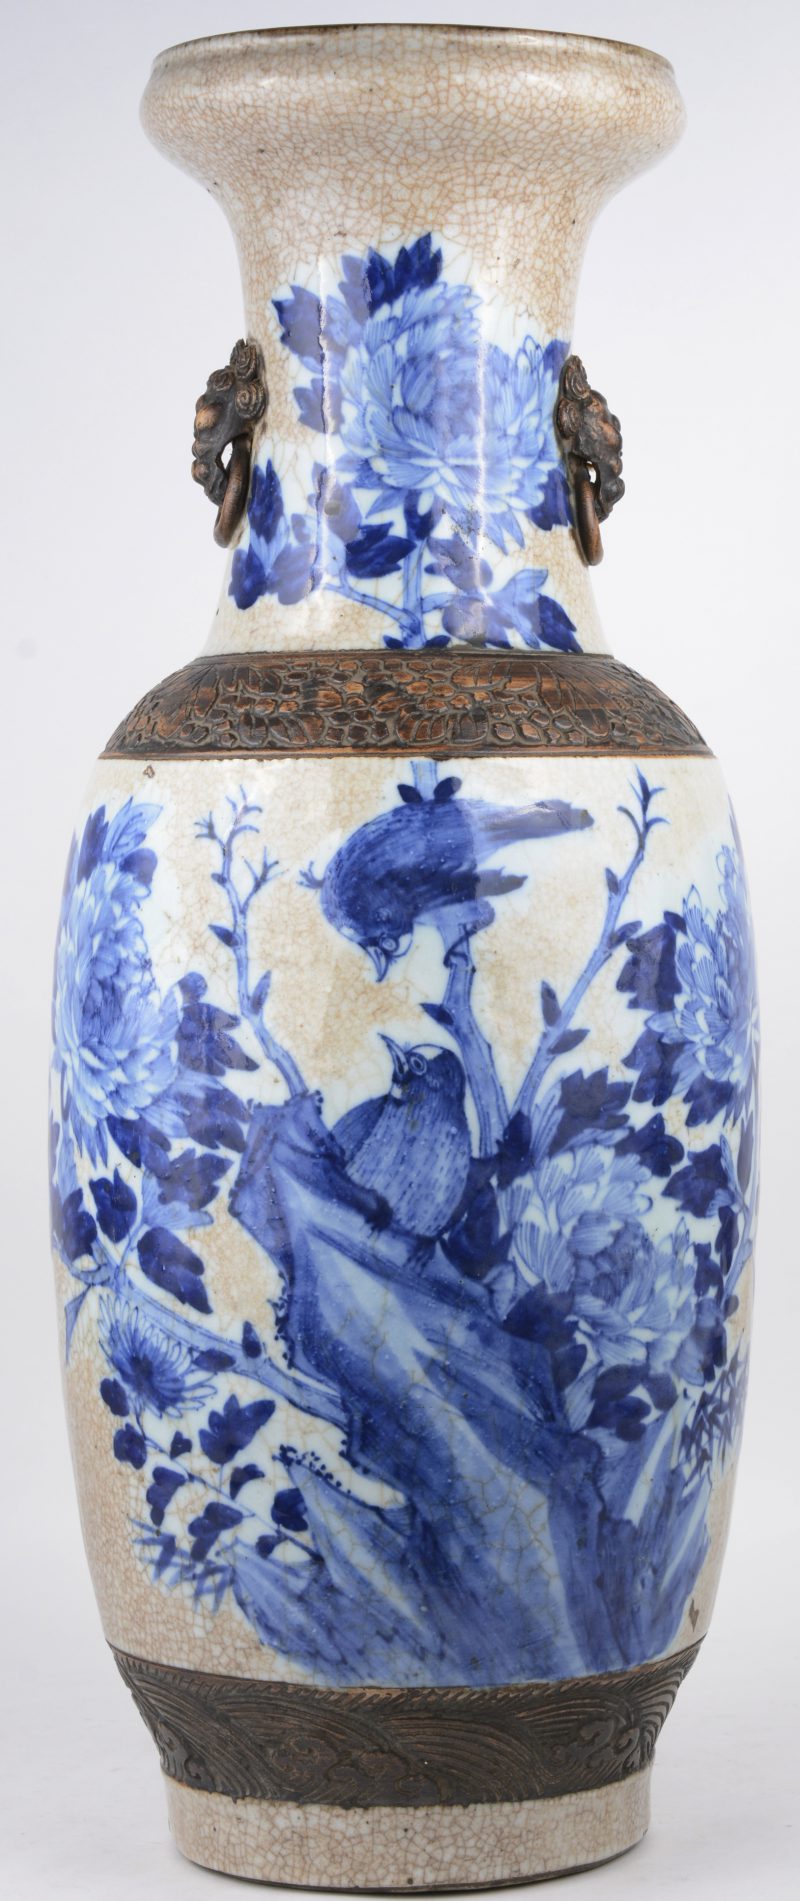 Naning vaas van Chinees aardewerk met decor van vogels en bloemen. Onderaan gemerkt.